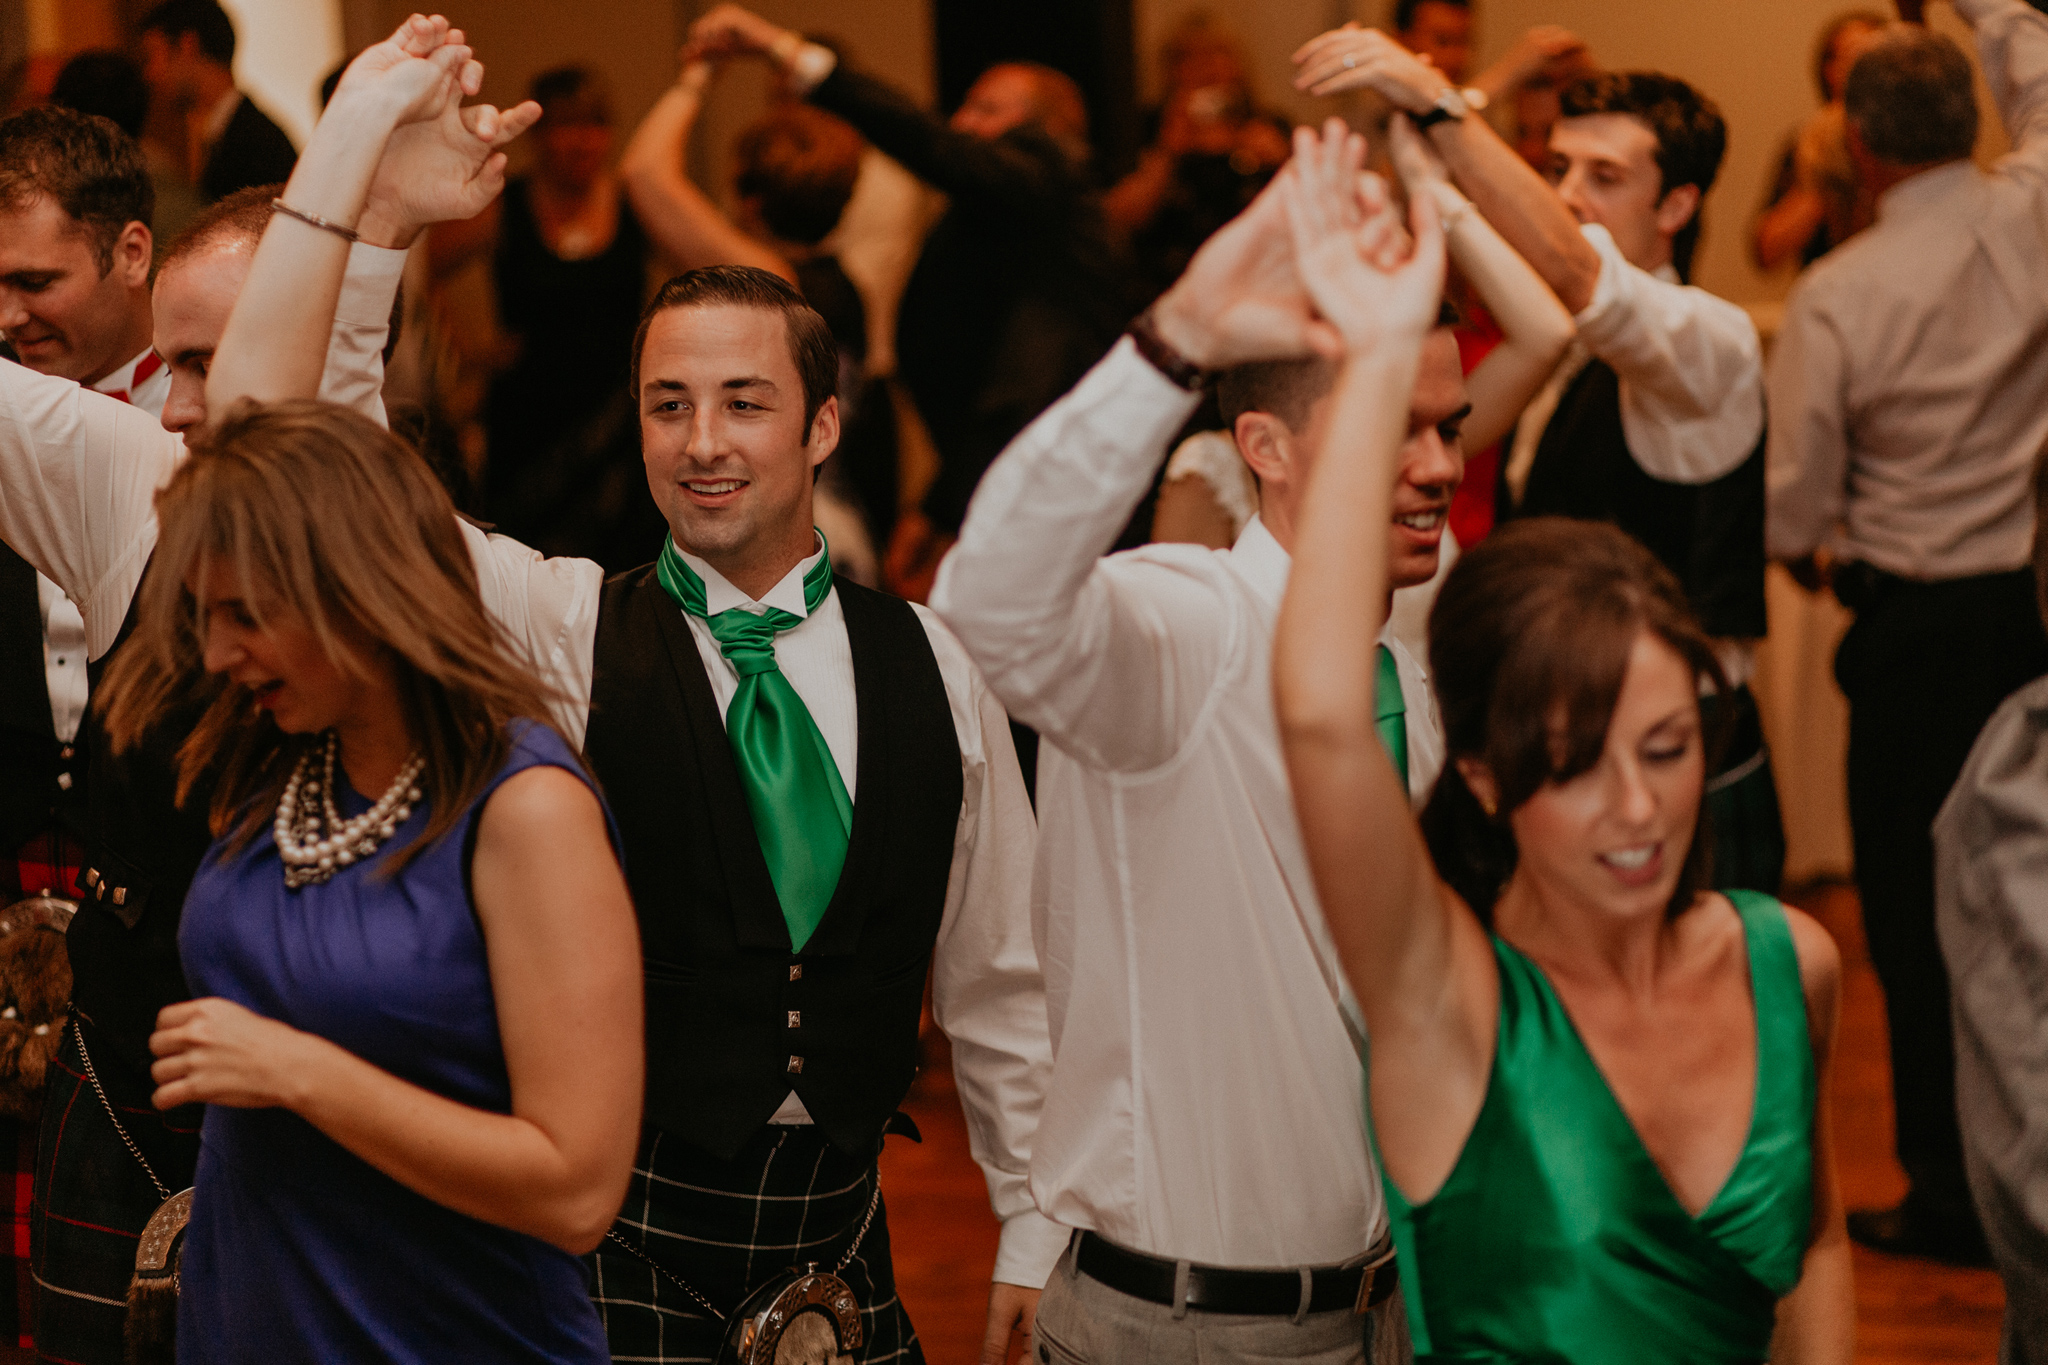 Guests dance at Scottish wedding reception